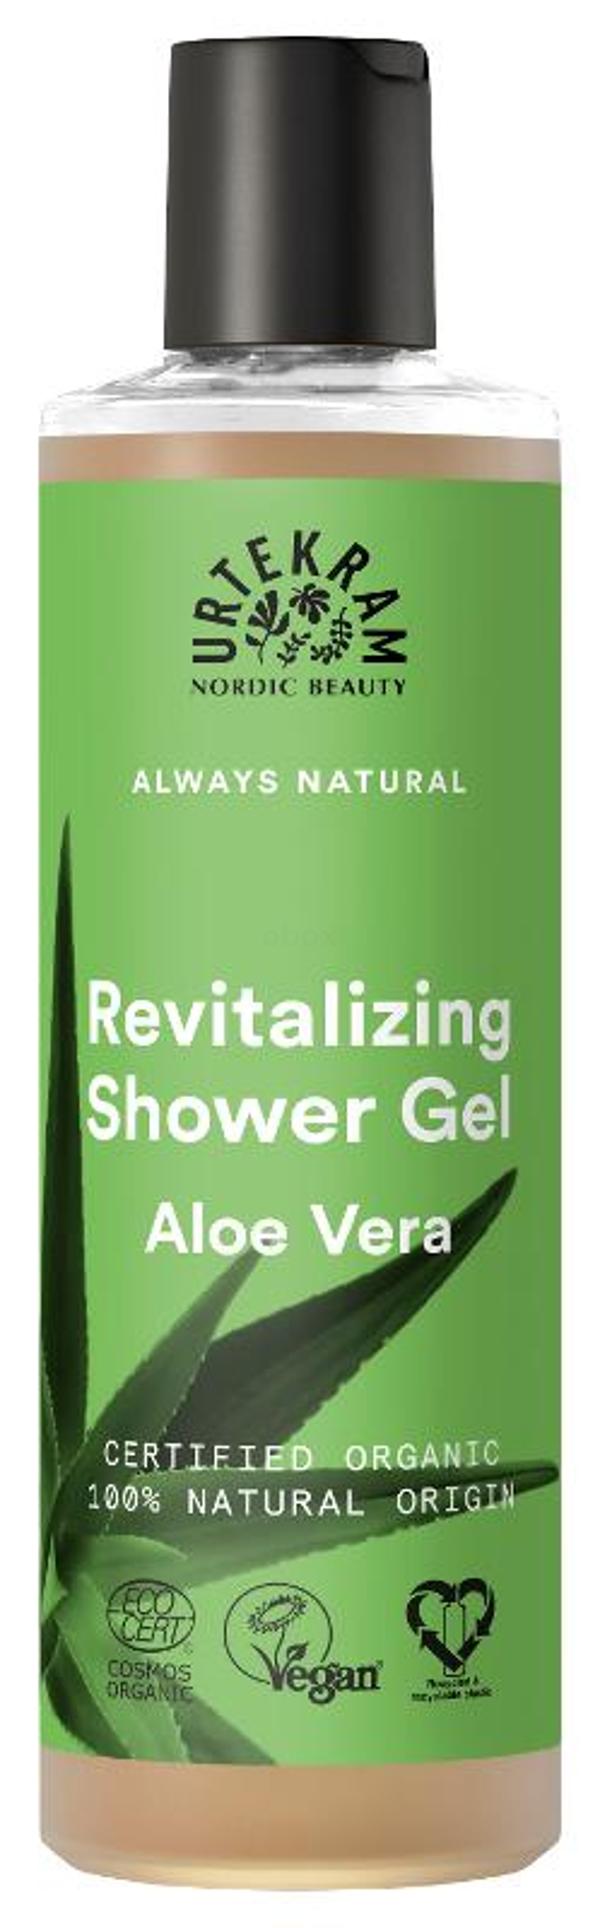 Produktfoto zu Revitalizing Shower Gel Aloe Vera